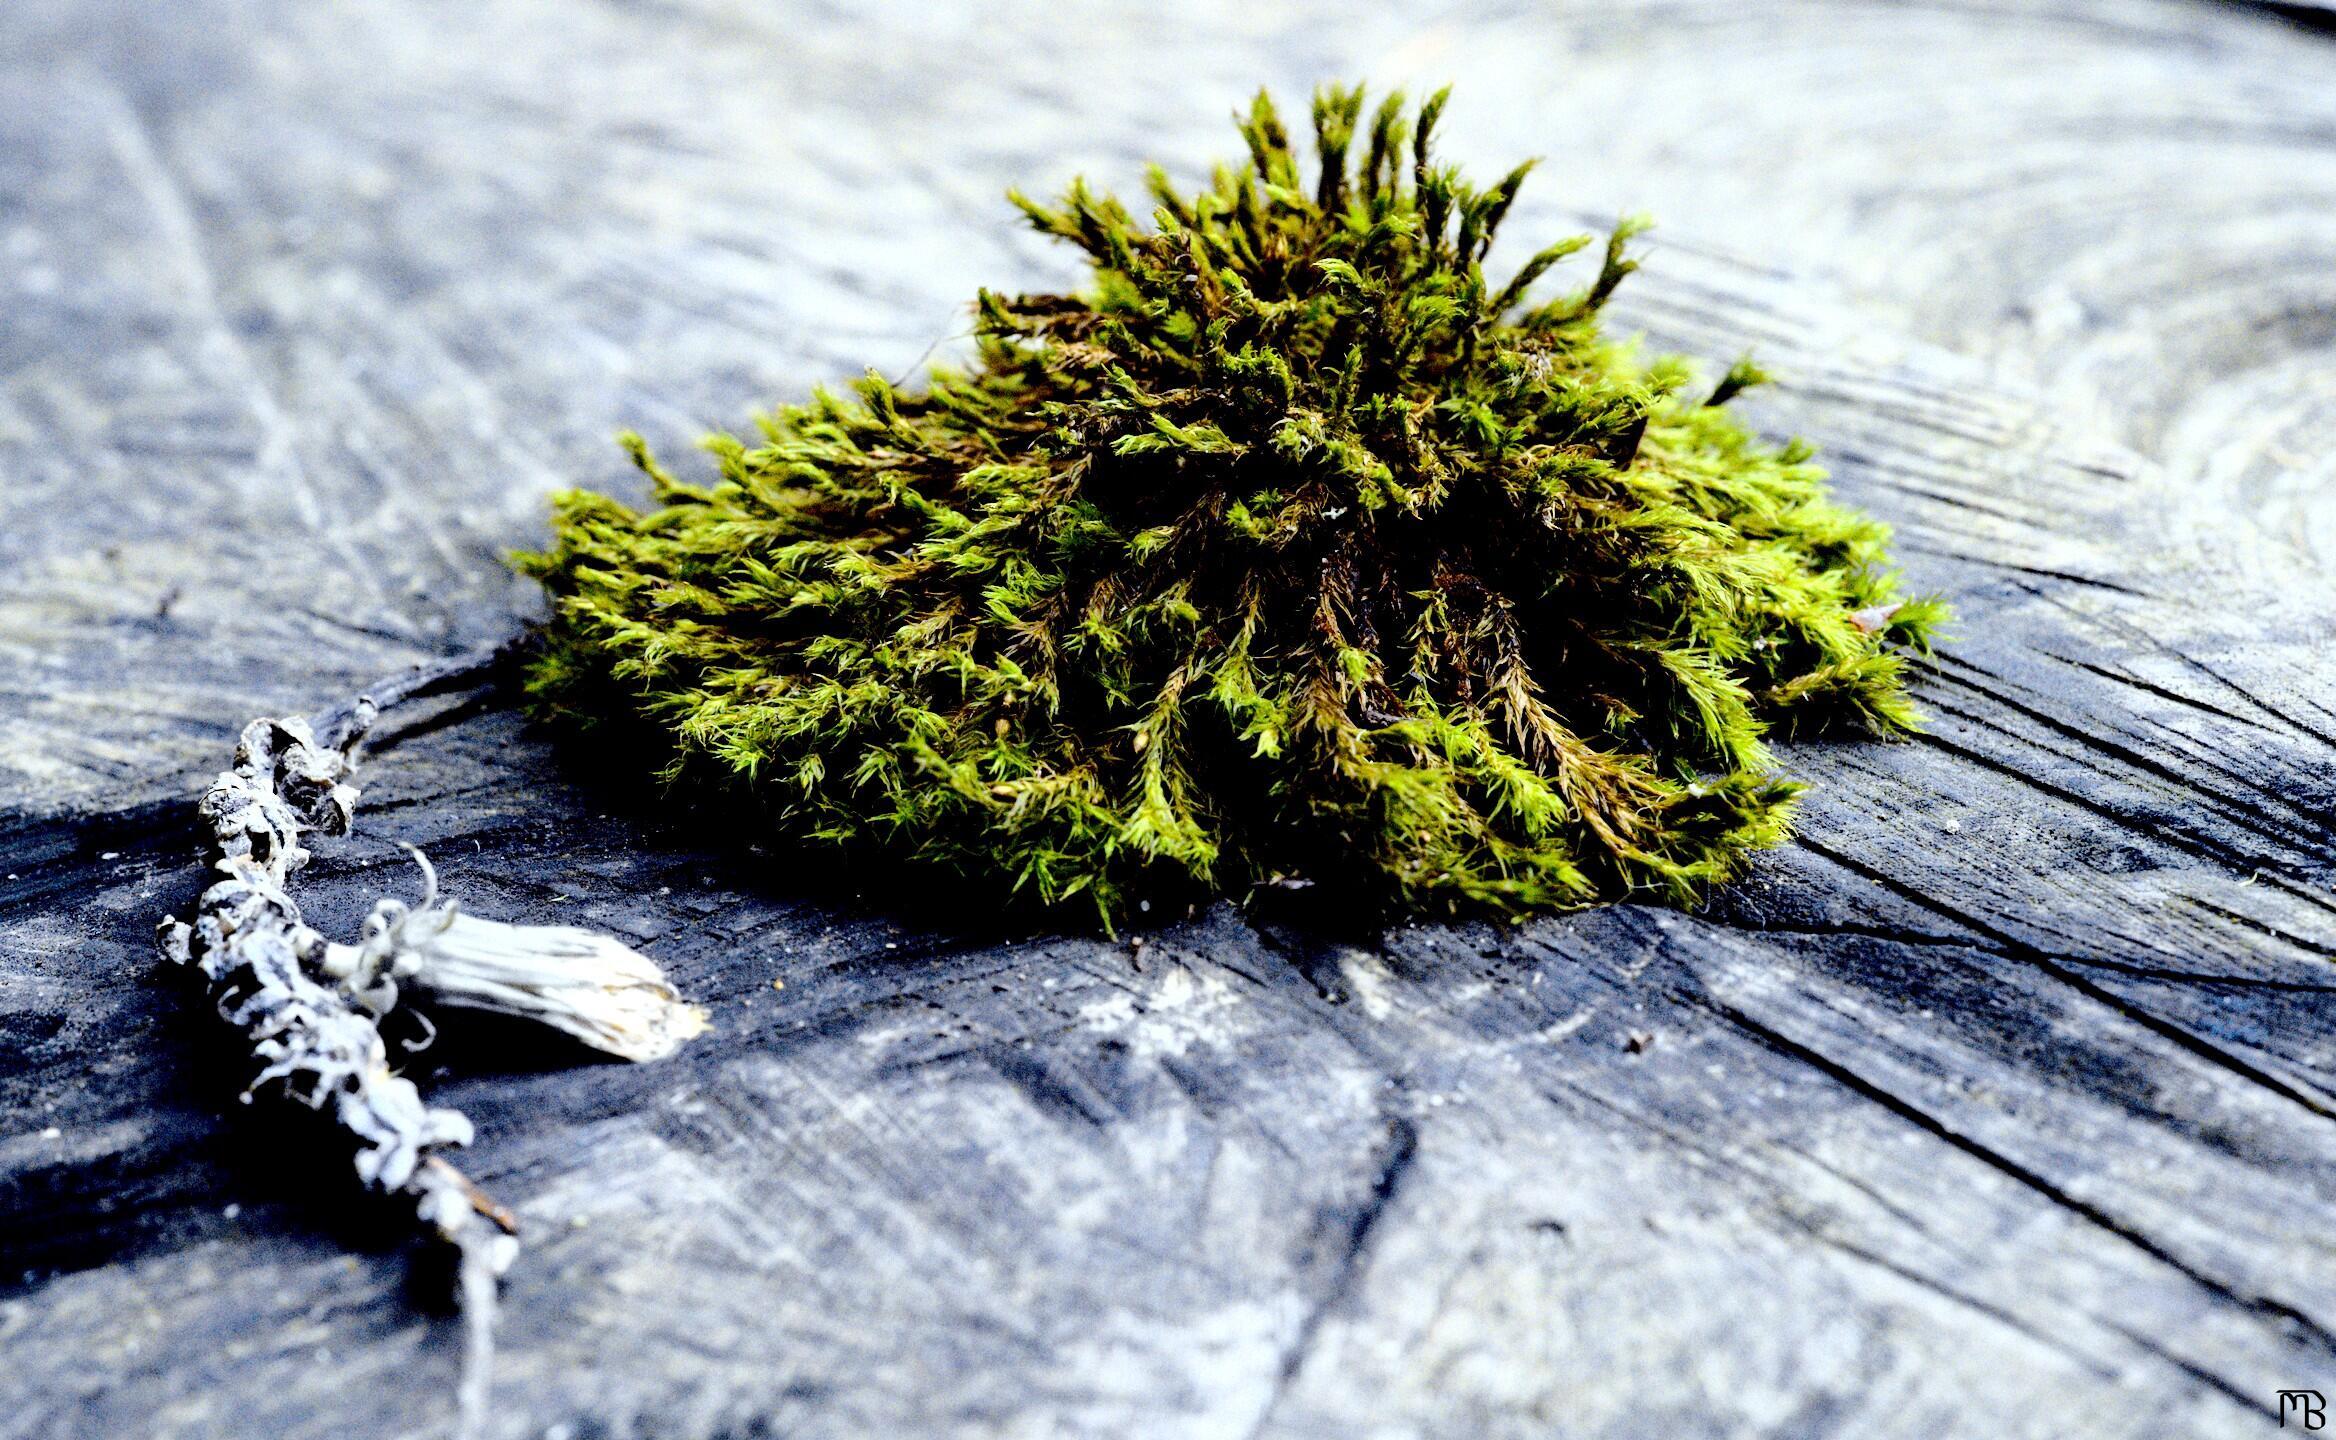 Arty green moss on tree stump